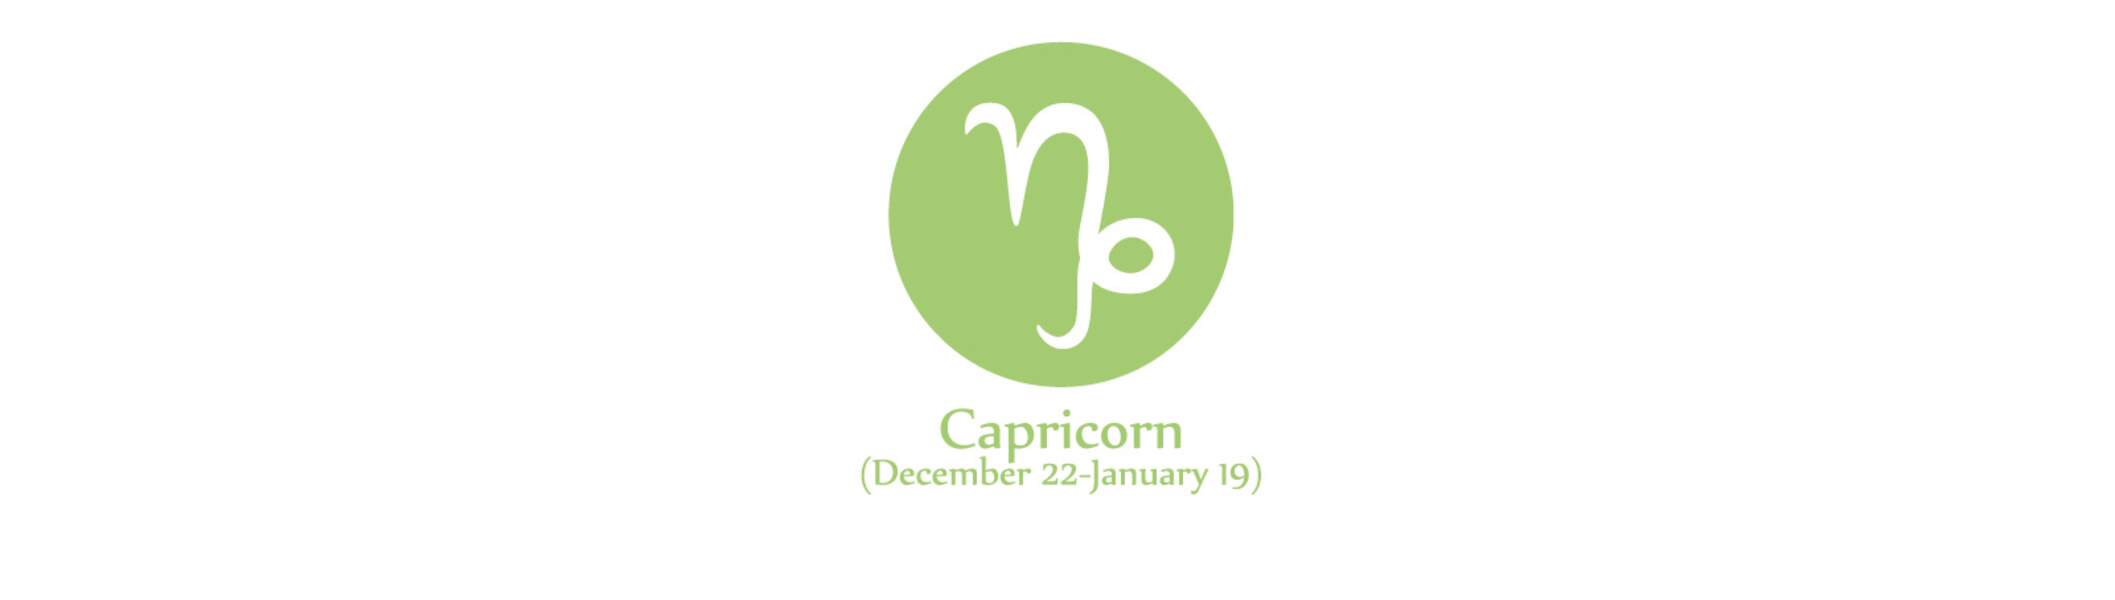 Horoscope de la semaine prochaine pour le Capricorne